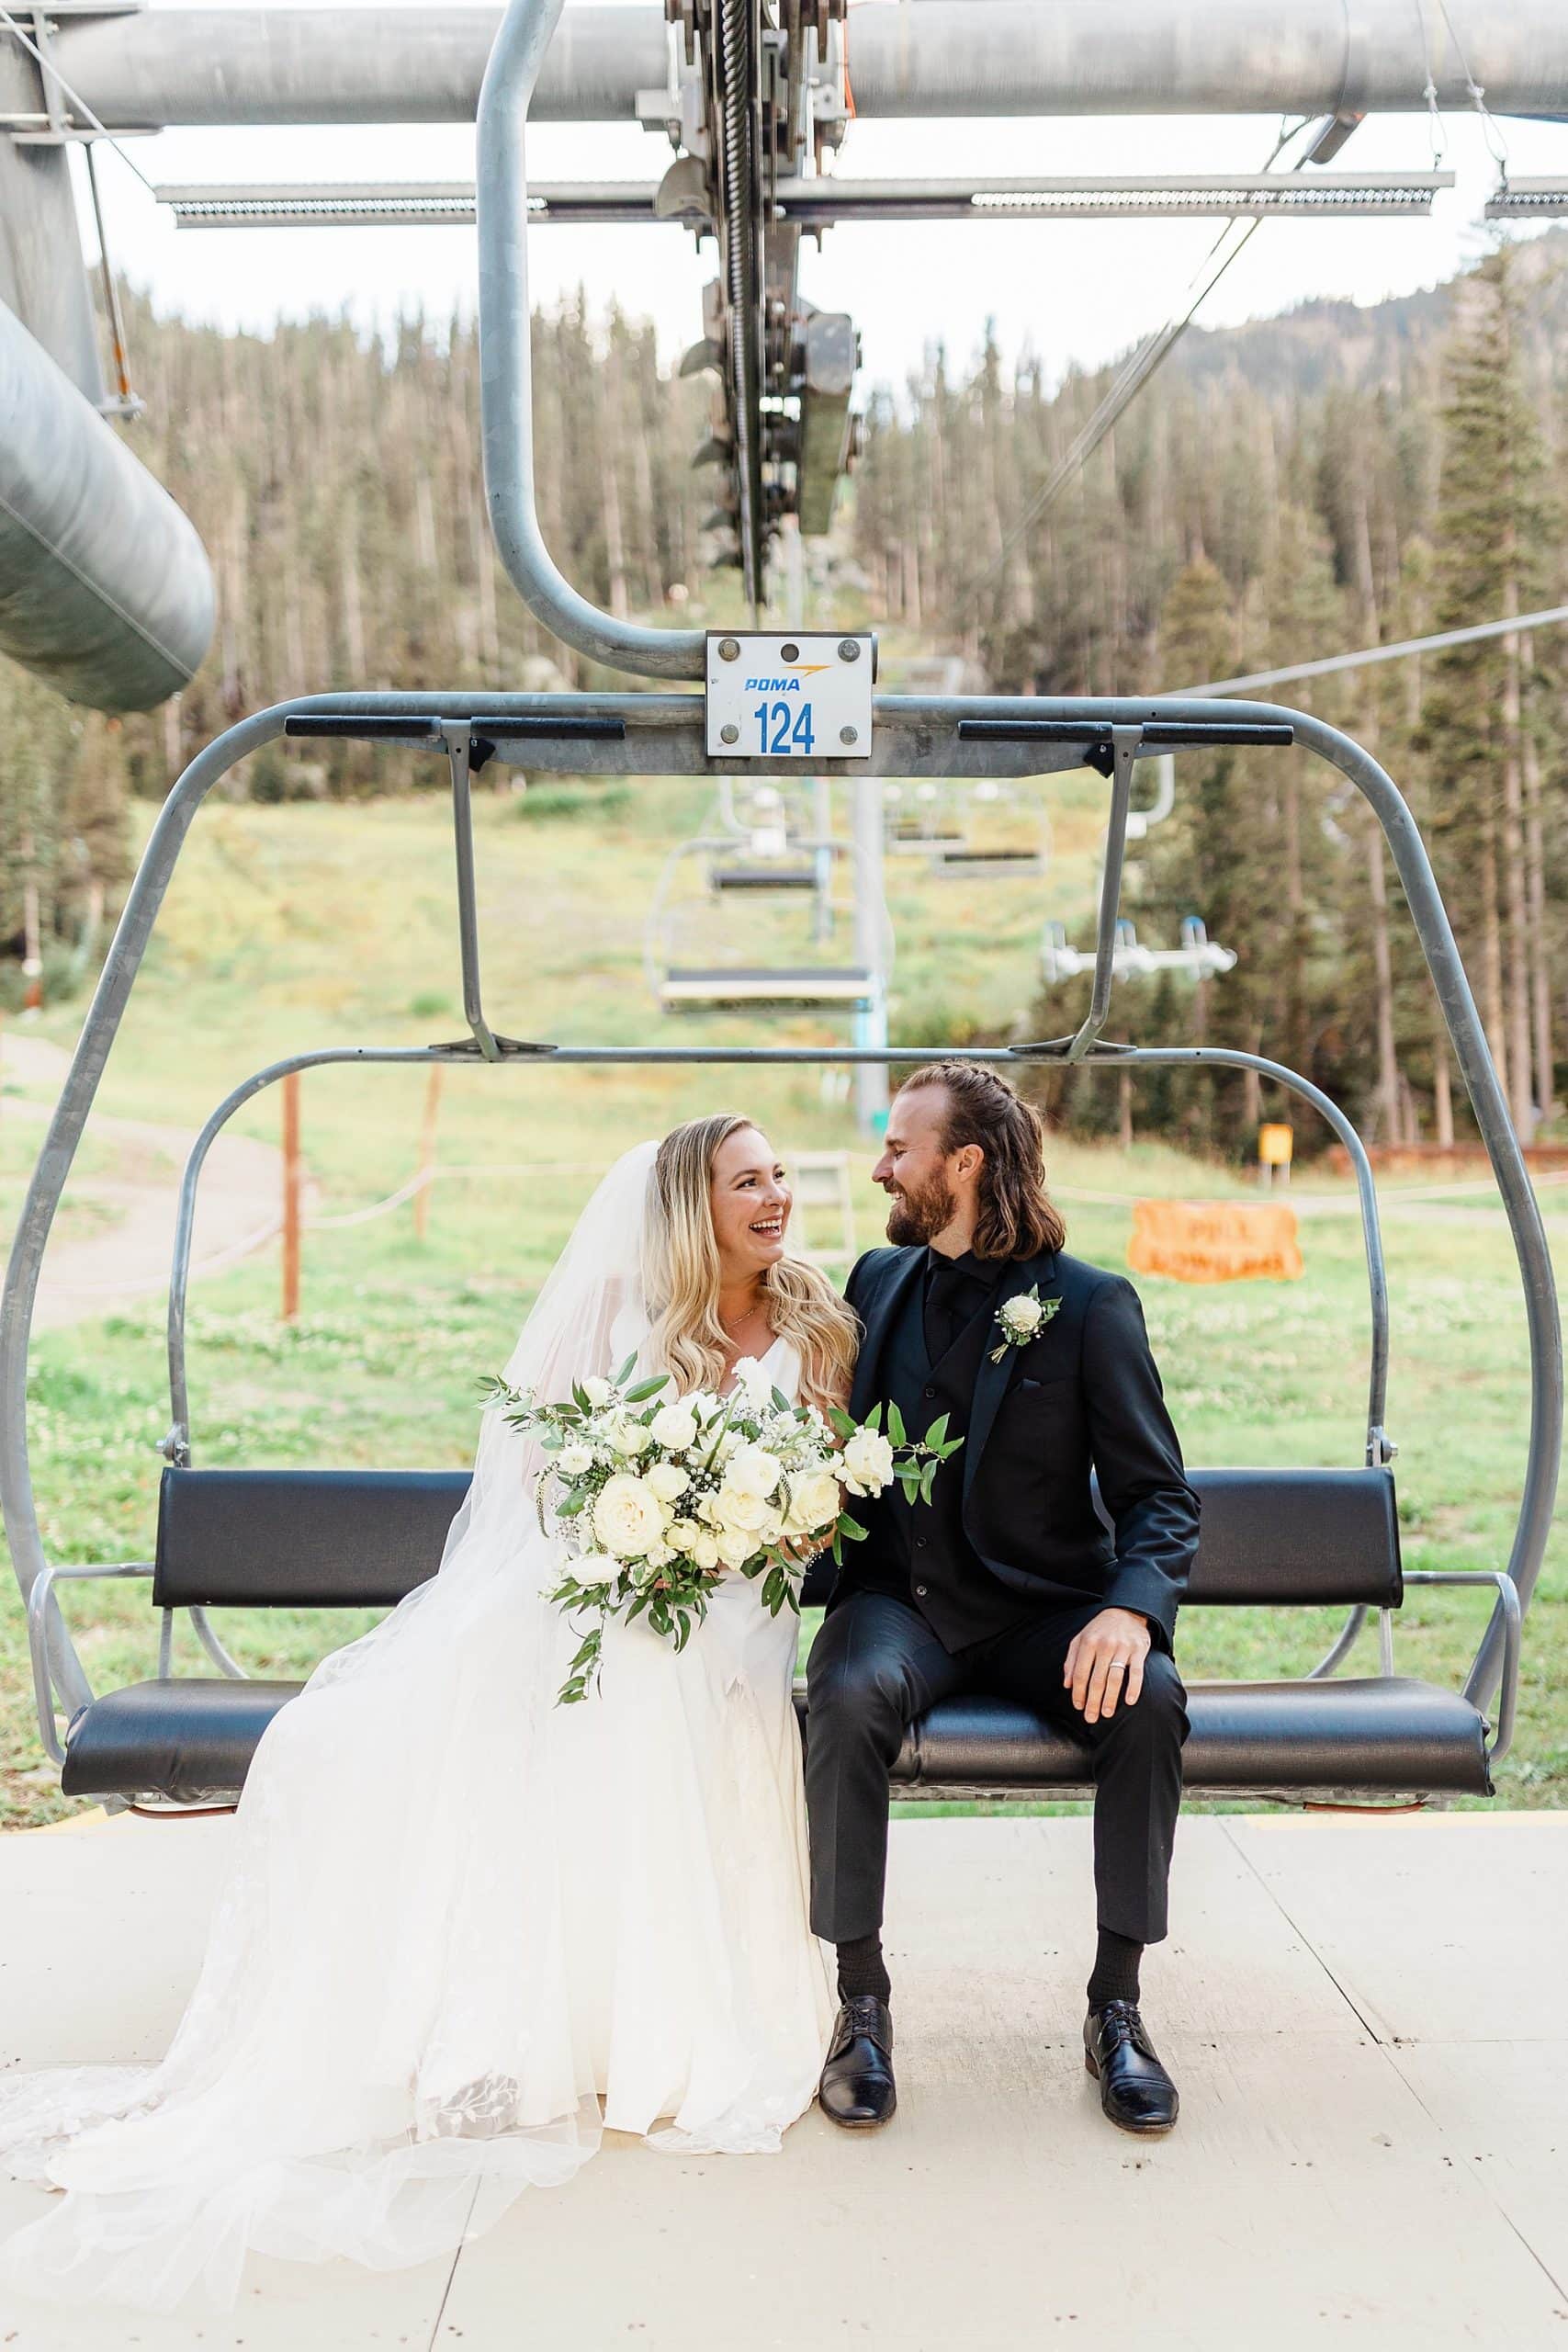 A couple rides a ski lift in Taos Ski Valley in wedding attire. 